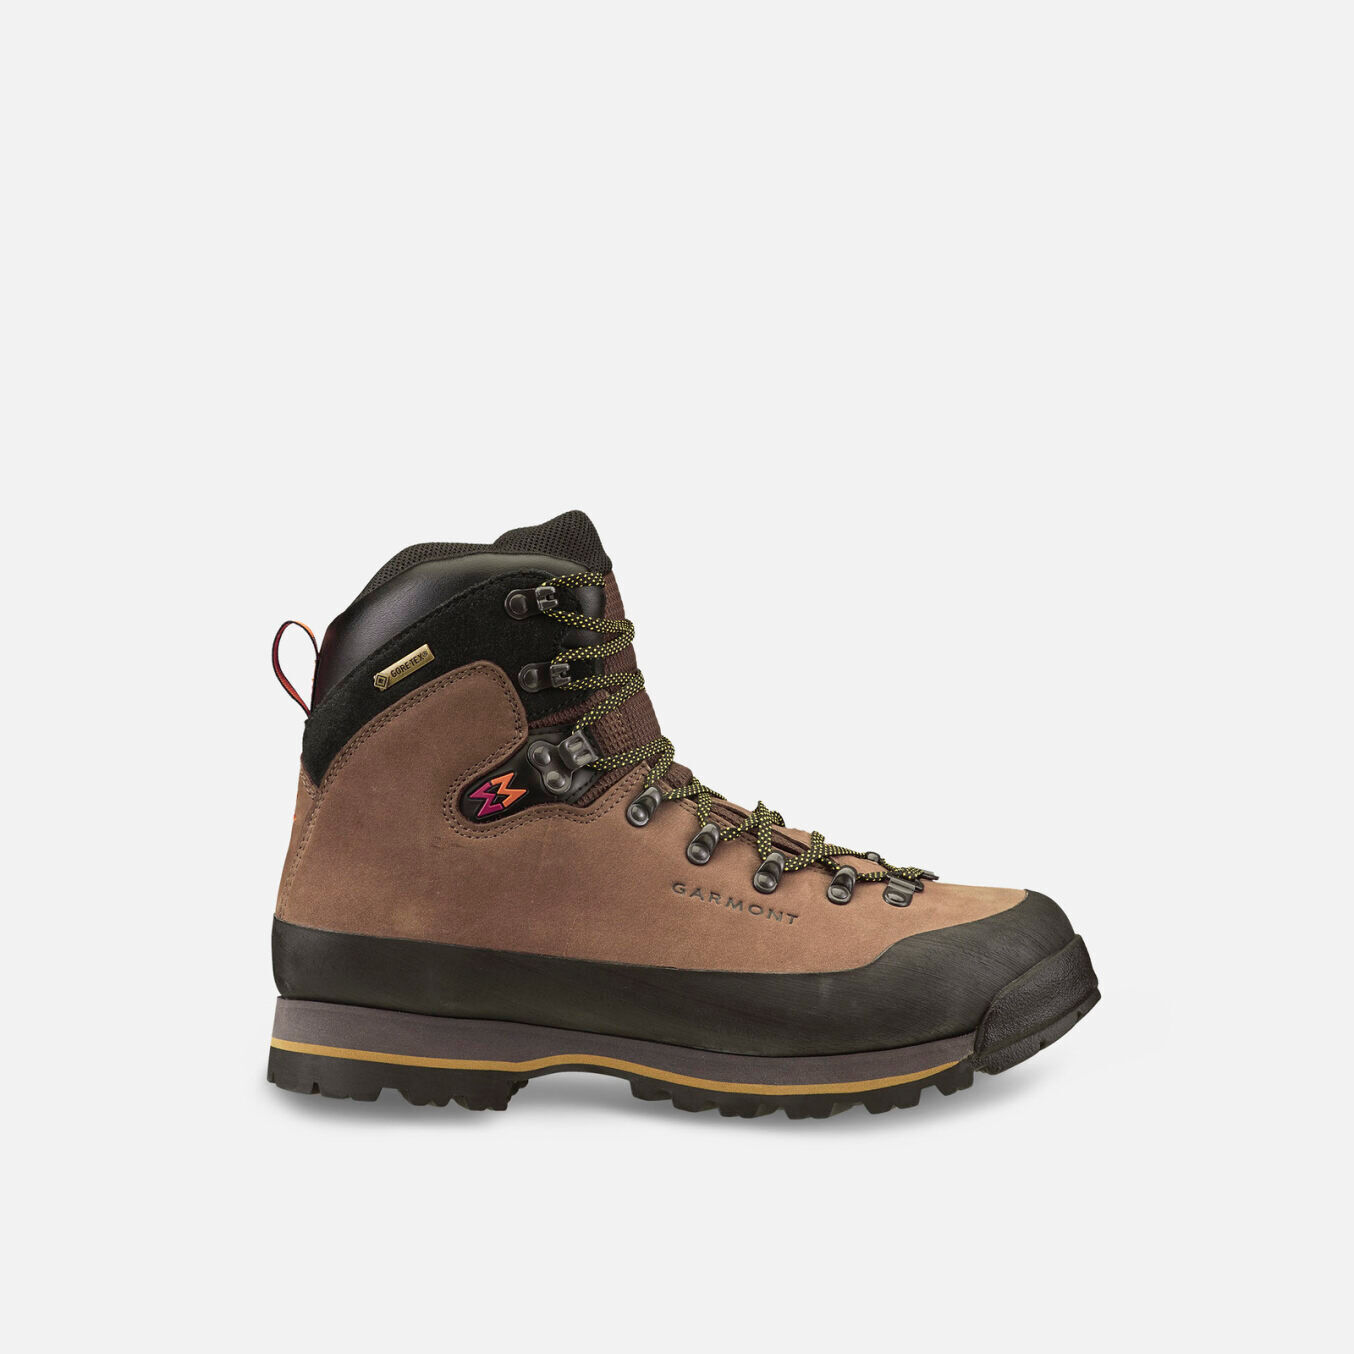 Garmont Nebraska GTX  - Hiking boots - Men's